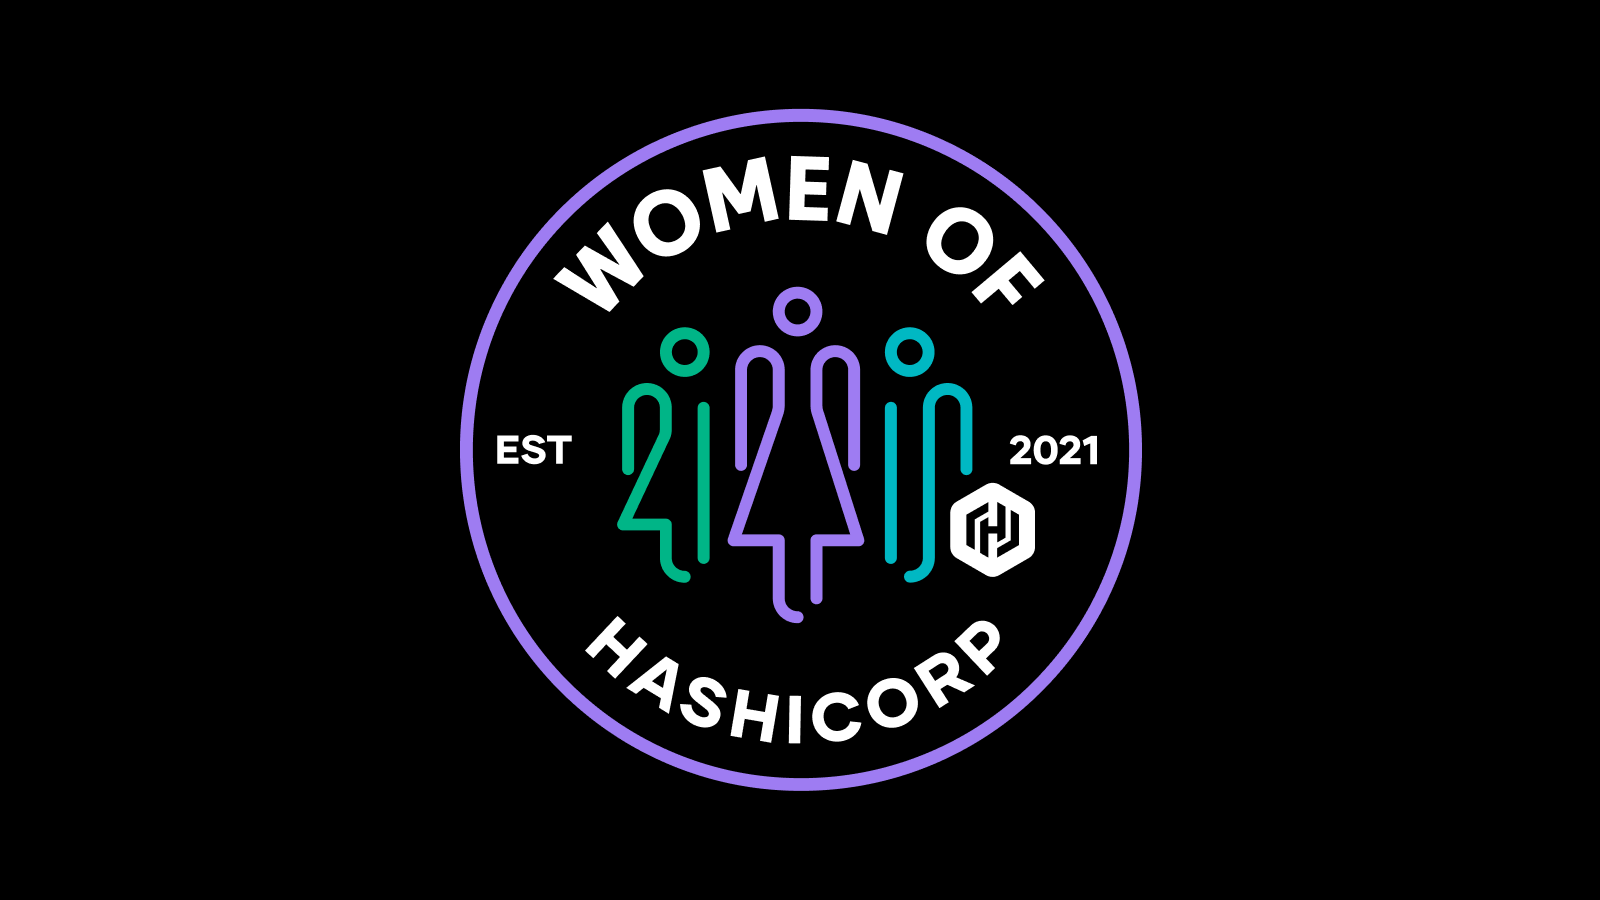 HashiCorp spotlights Women’s History Month